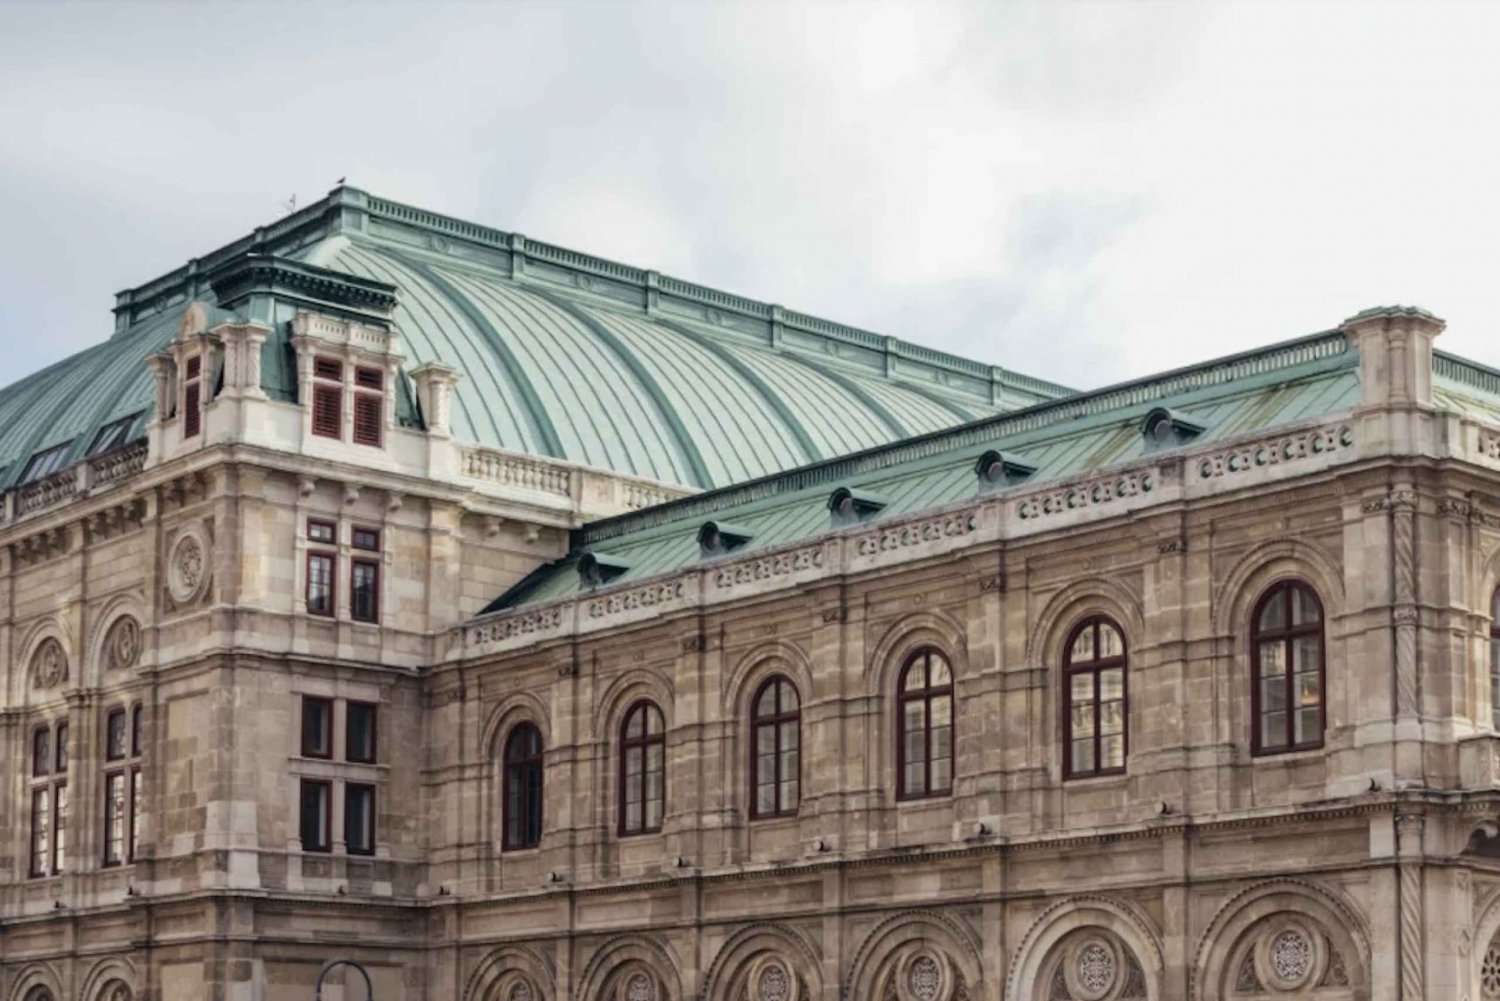 En selvguidet tur til Wien, den klassiske musiks hjemsted